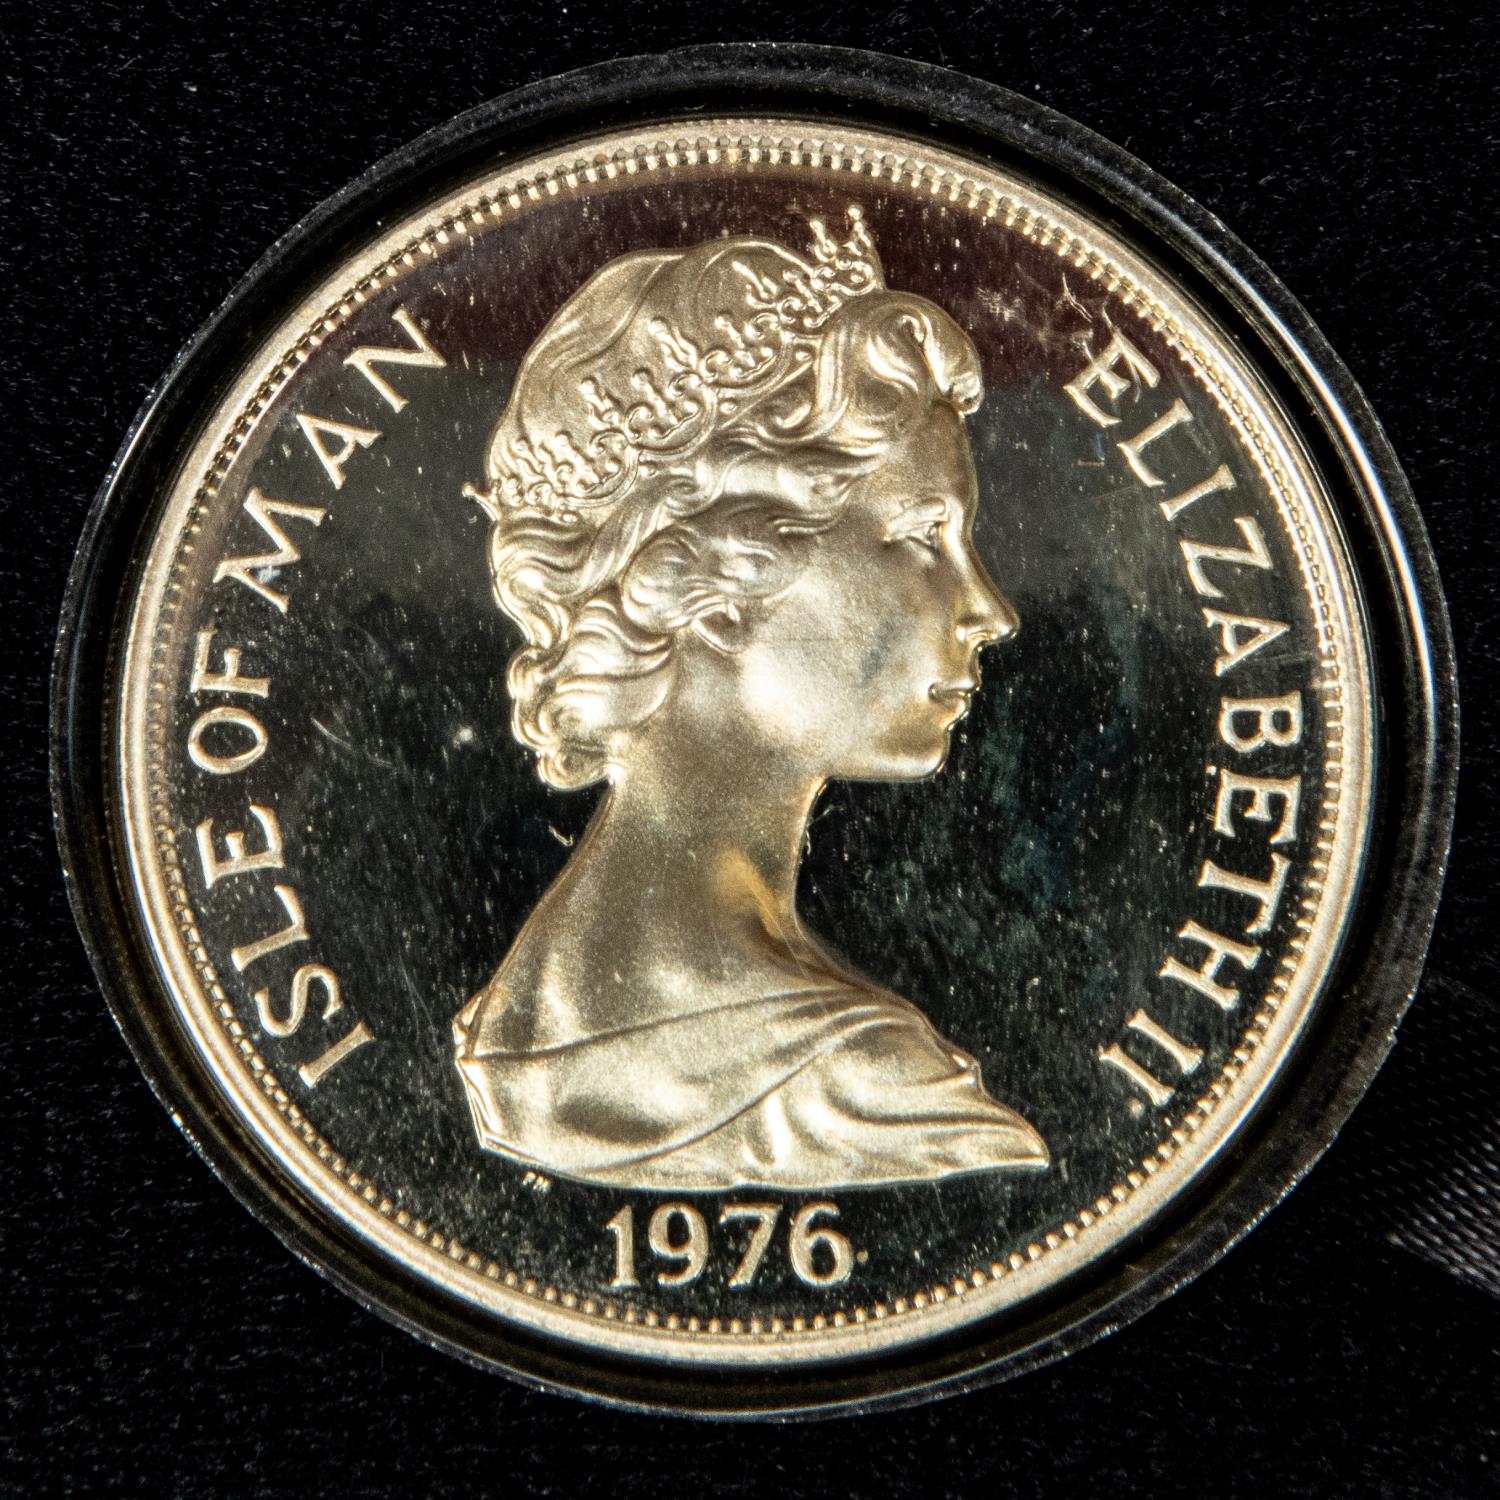 2 gilt Masonic medals, 4 gilt and enamel Steward's jewels; a gilt Masonic Centenary jewel 1983 and - Image 5 of 5